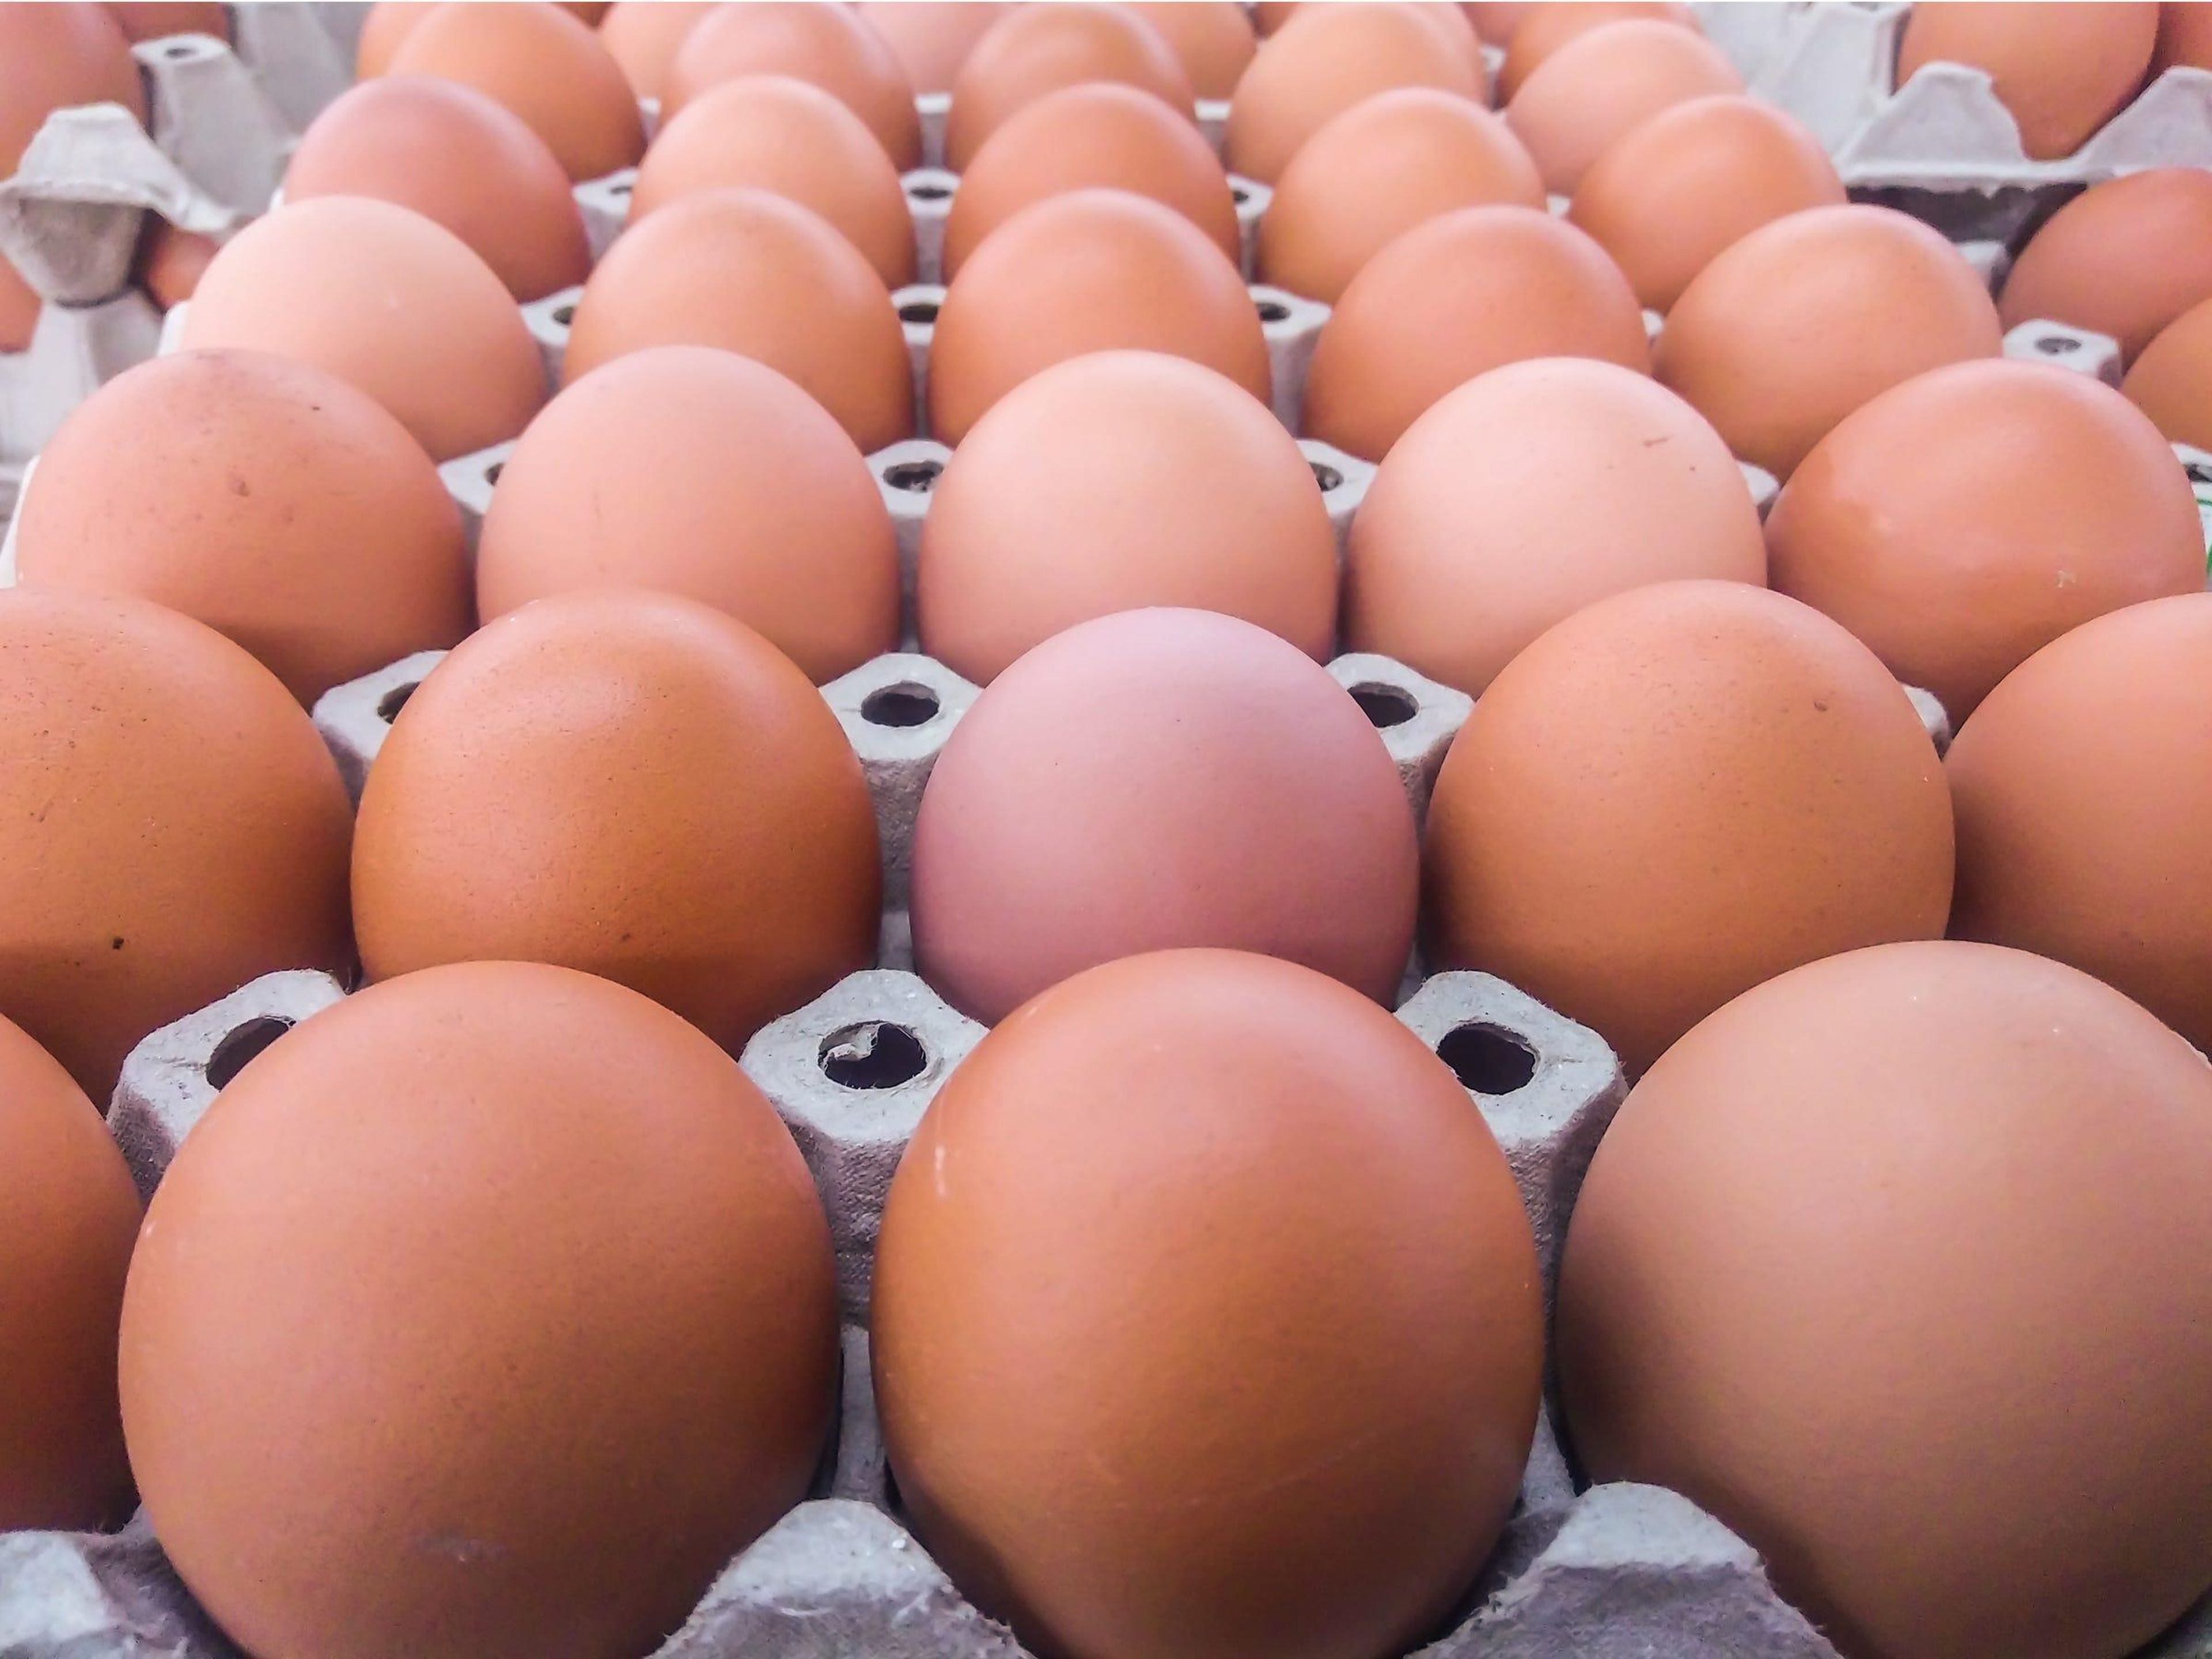 Eggs need consistent temperatures.